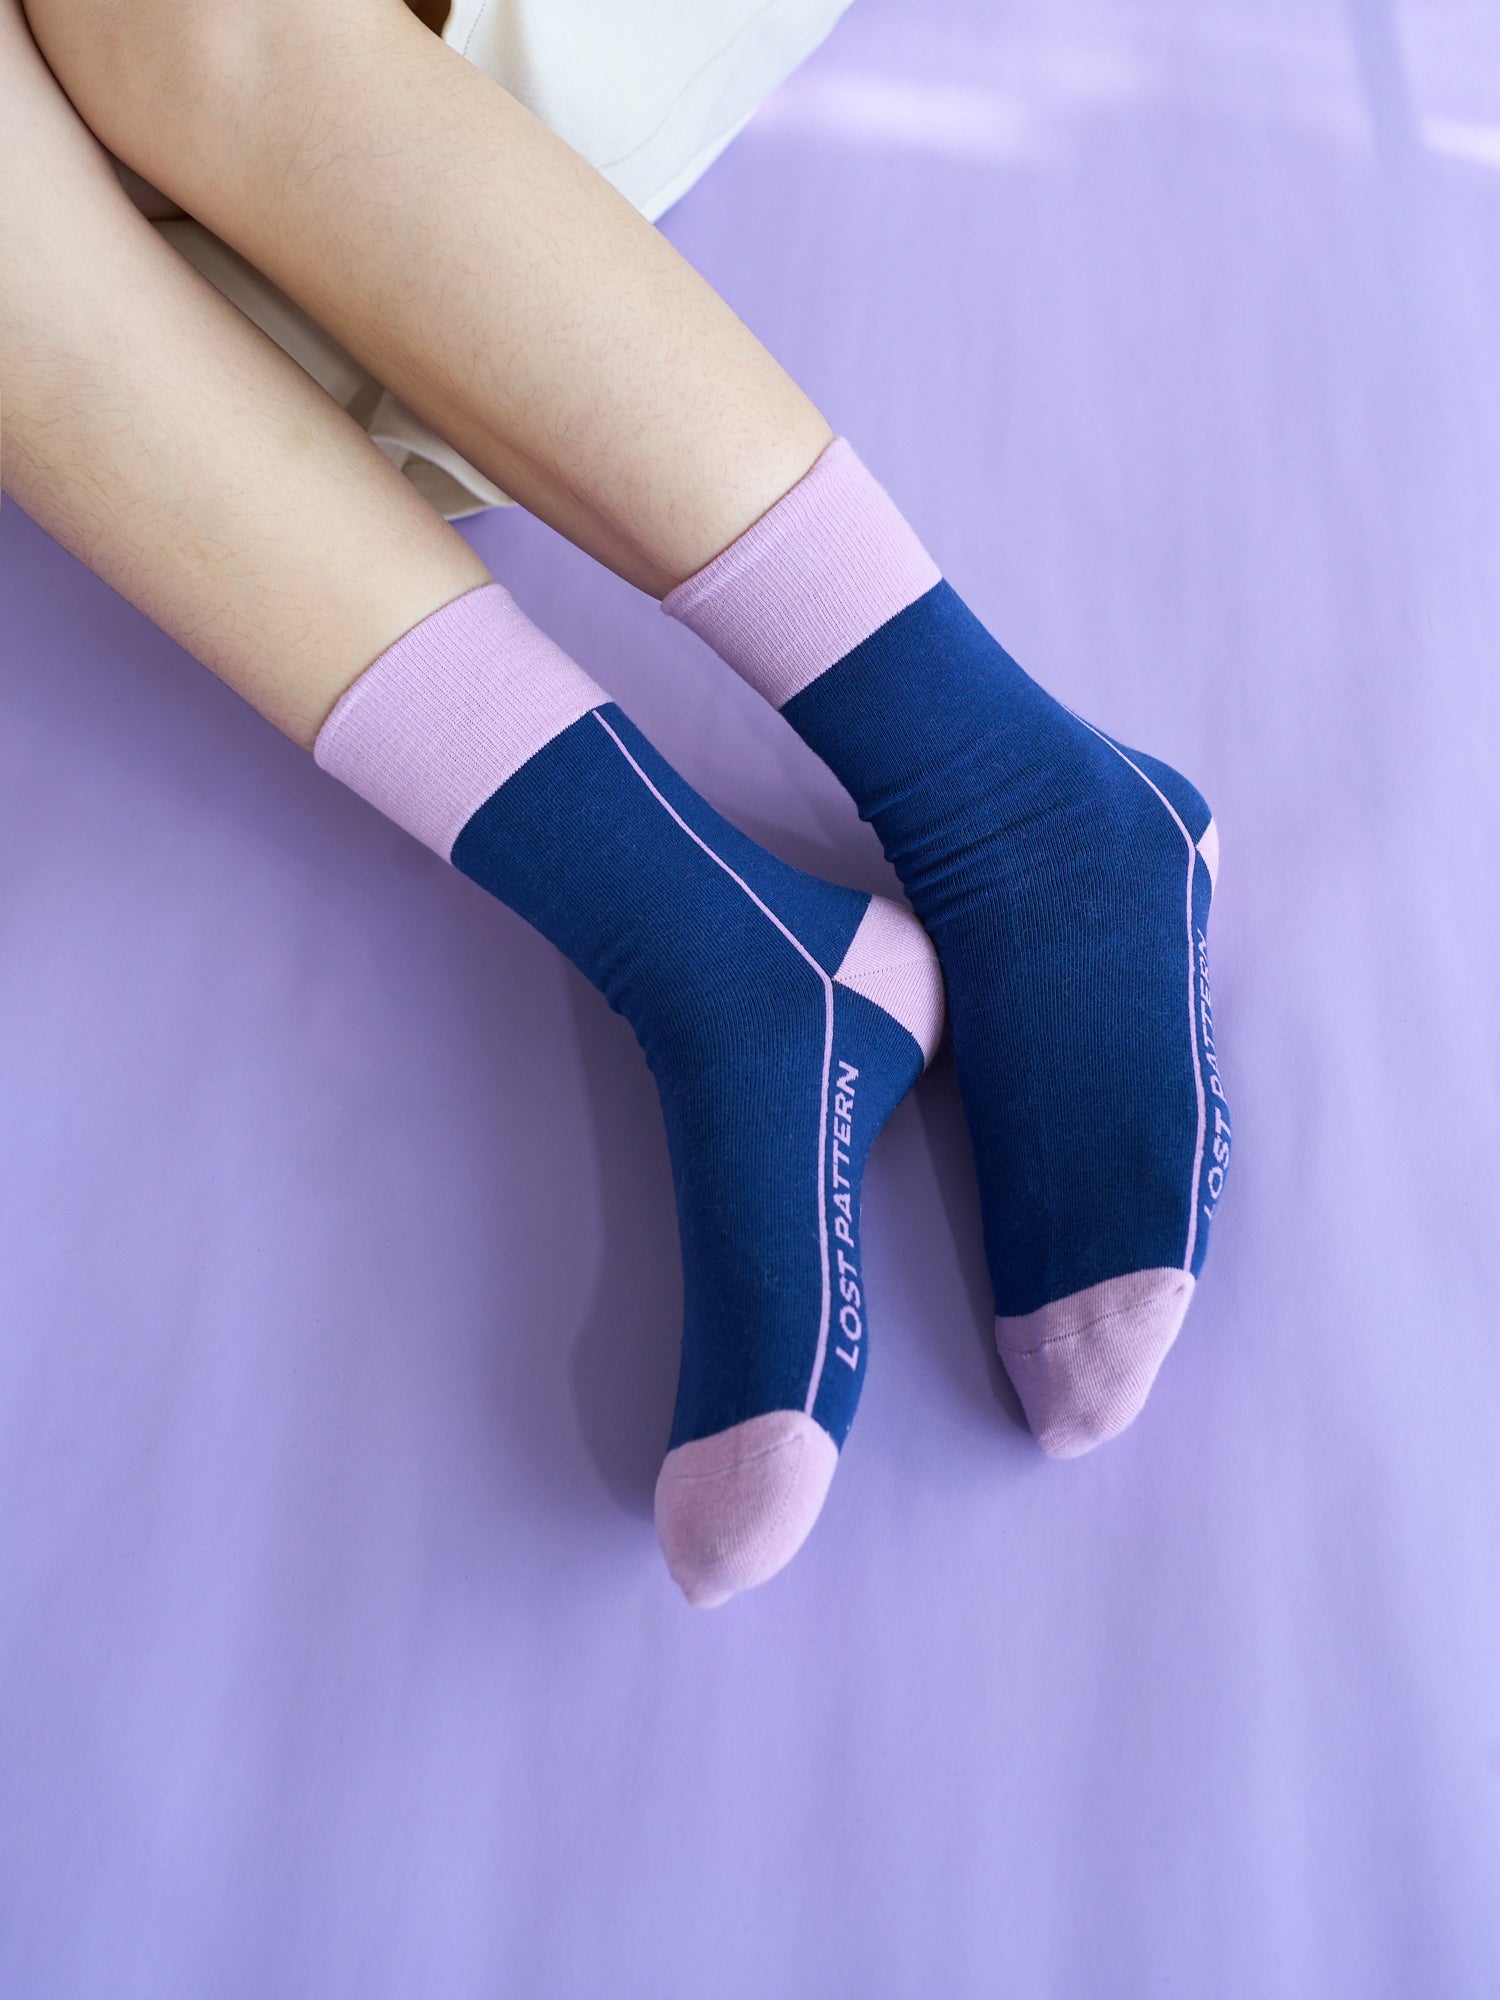 Shantall Lacayo x Lost Pattern Cotton Socks - Set of 3 - LOST PATTERN Socks